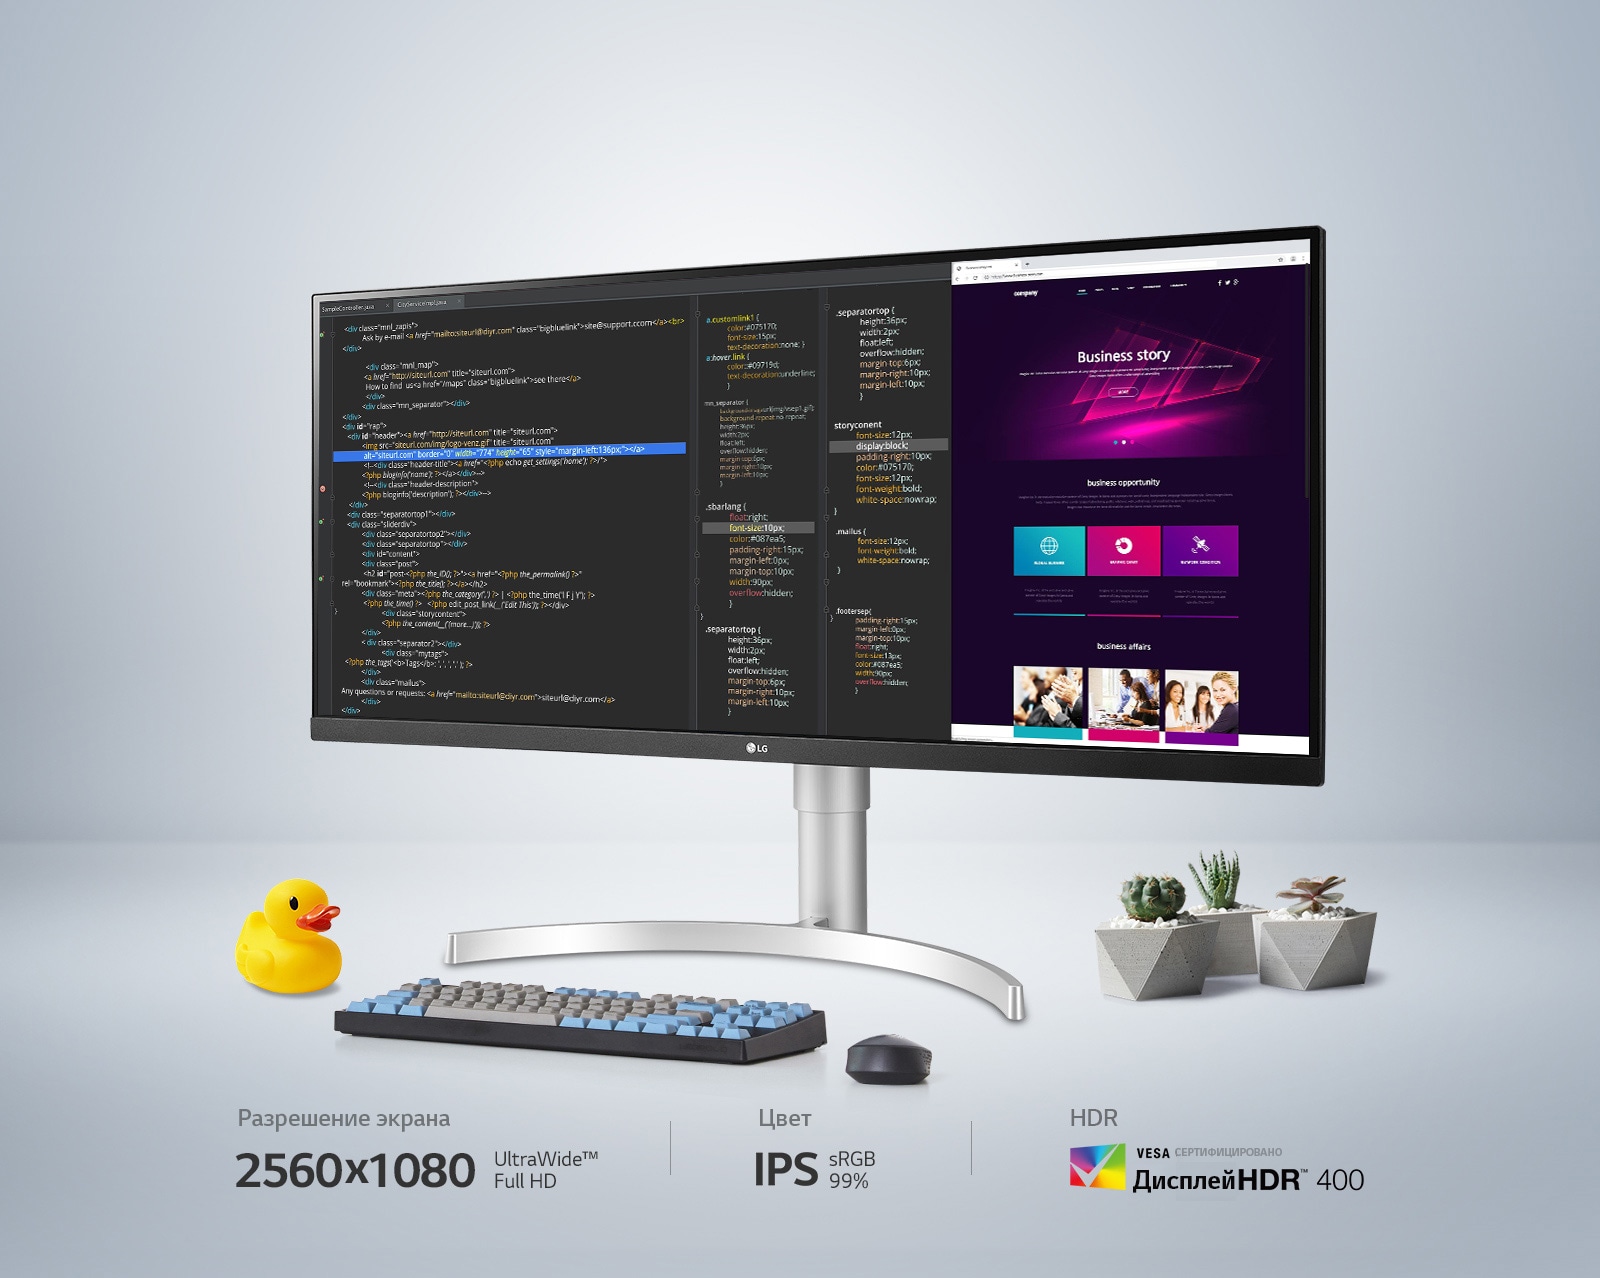 "Screen Space : 2560x1080 / UltraWide™ Full HD Color : IPS / sRGB 99% HDR : VESA CERTIFIED / DisplayHDR™ 400"